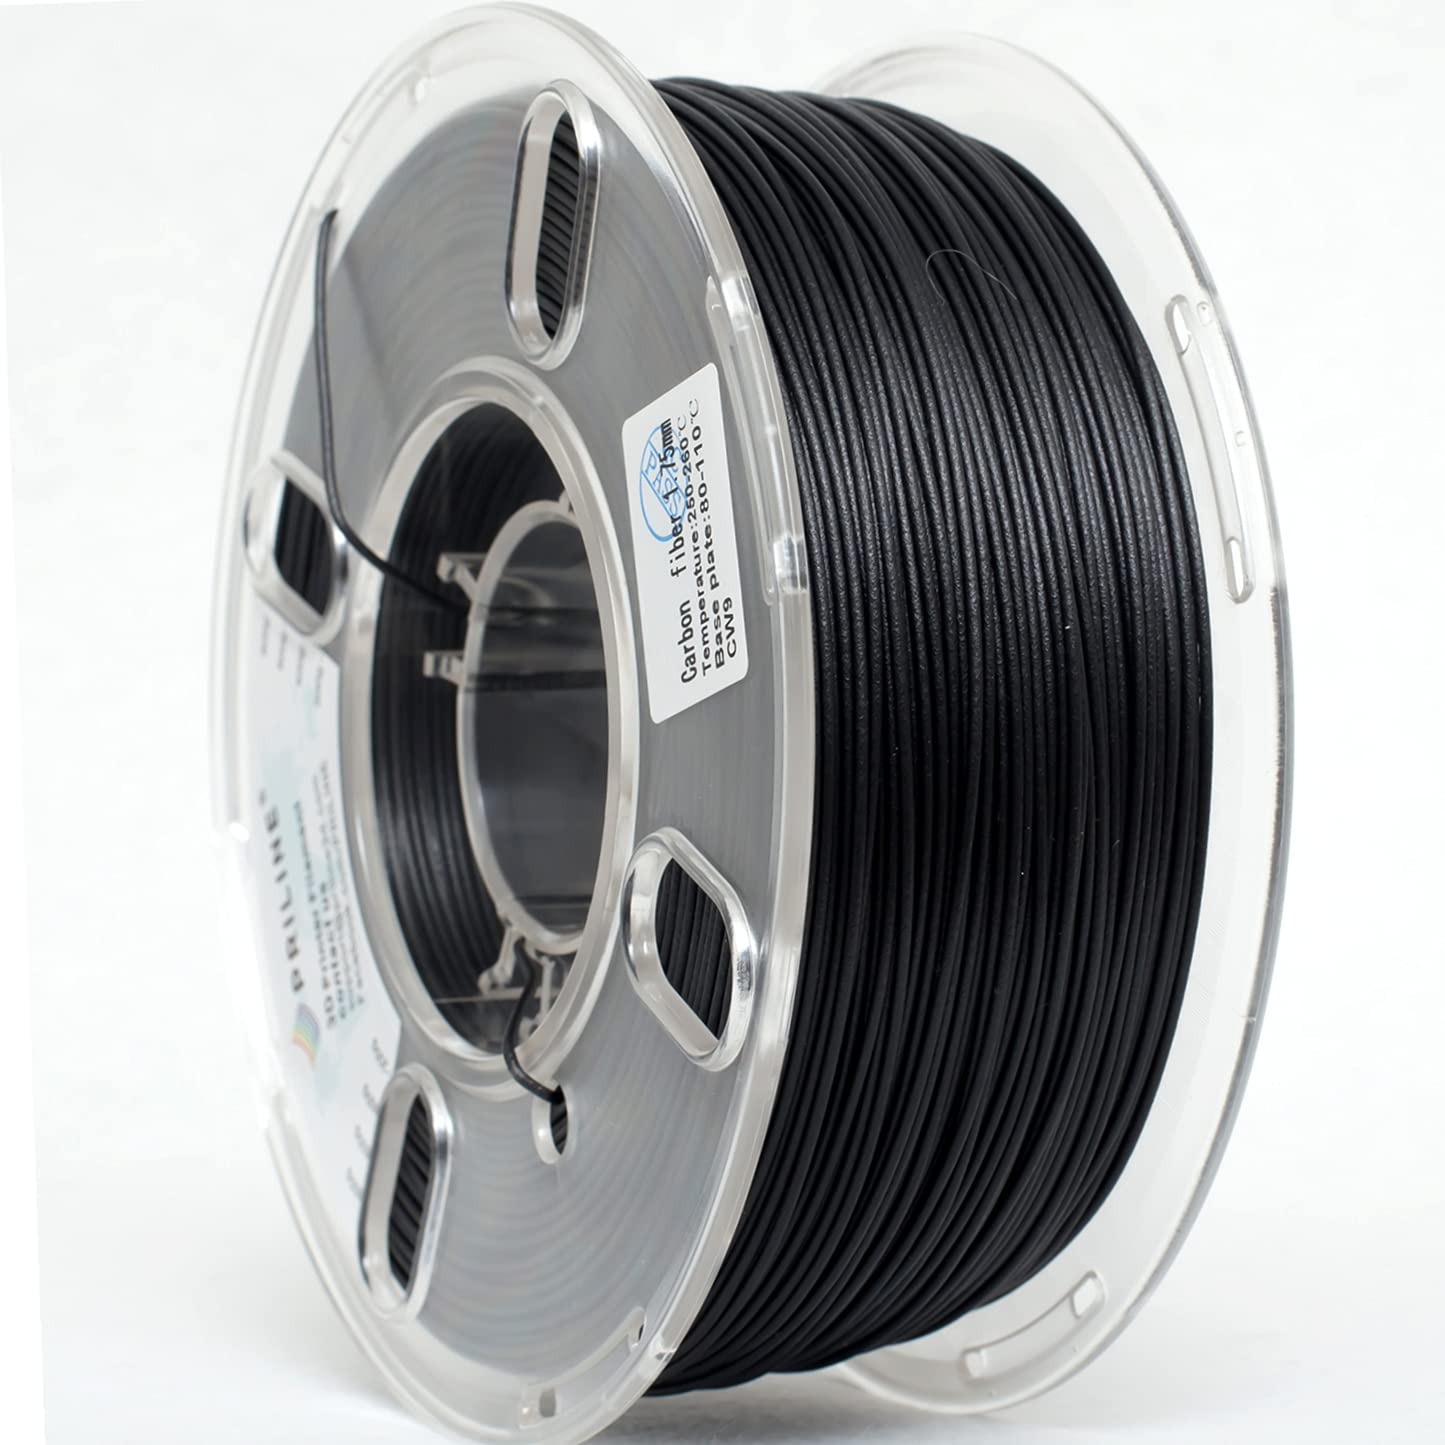 Superhard Carbon Fiber Polycarbonate 1KG 1.75 3D Printer Filament, Dimensional A